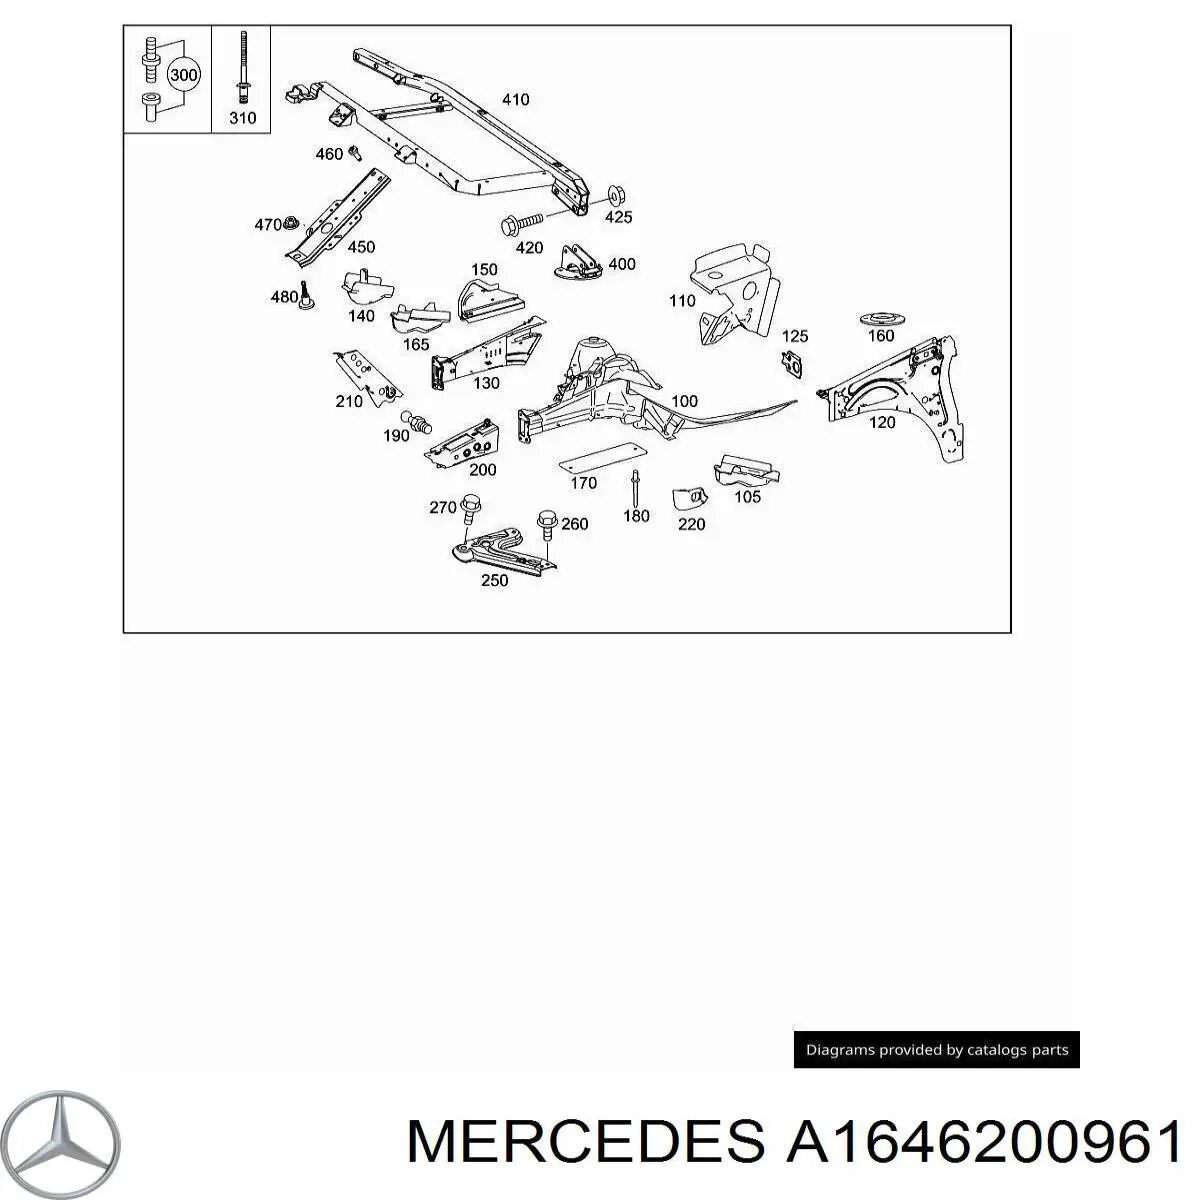 Longarina de chassi dianteira esquerda para Mercedes ML/GLE (W164)